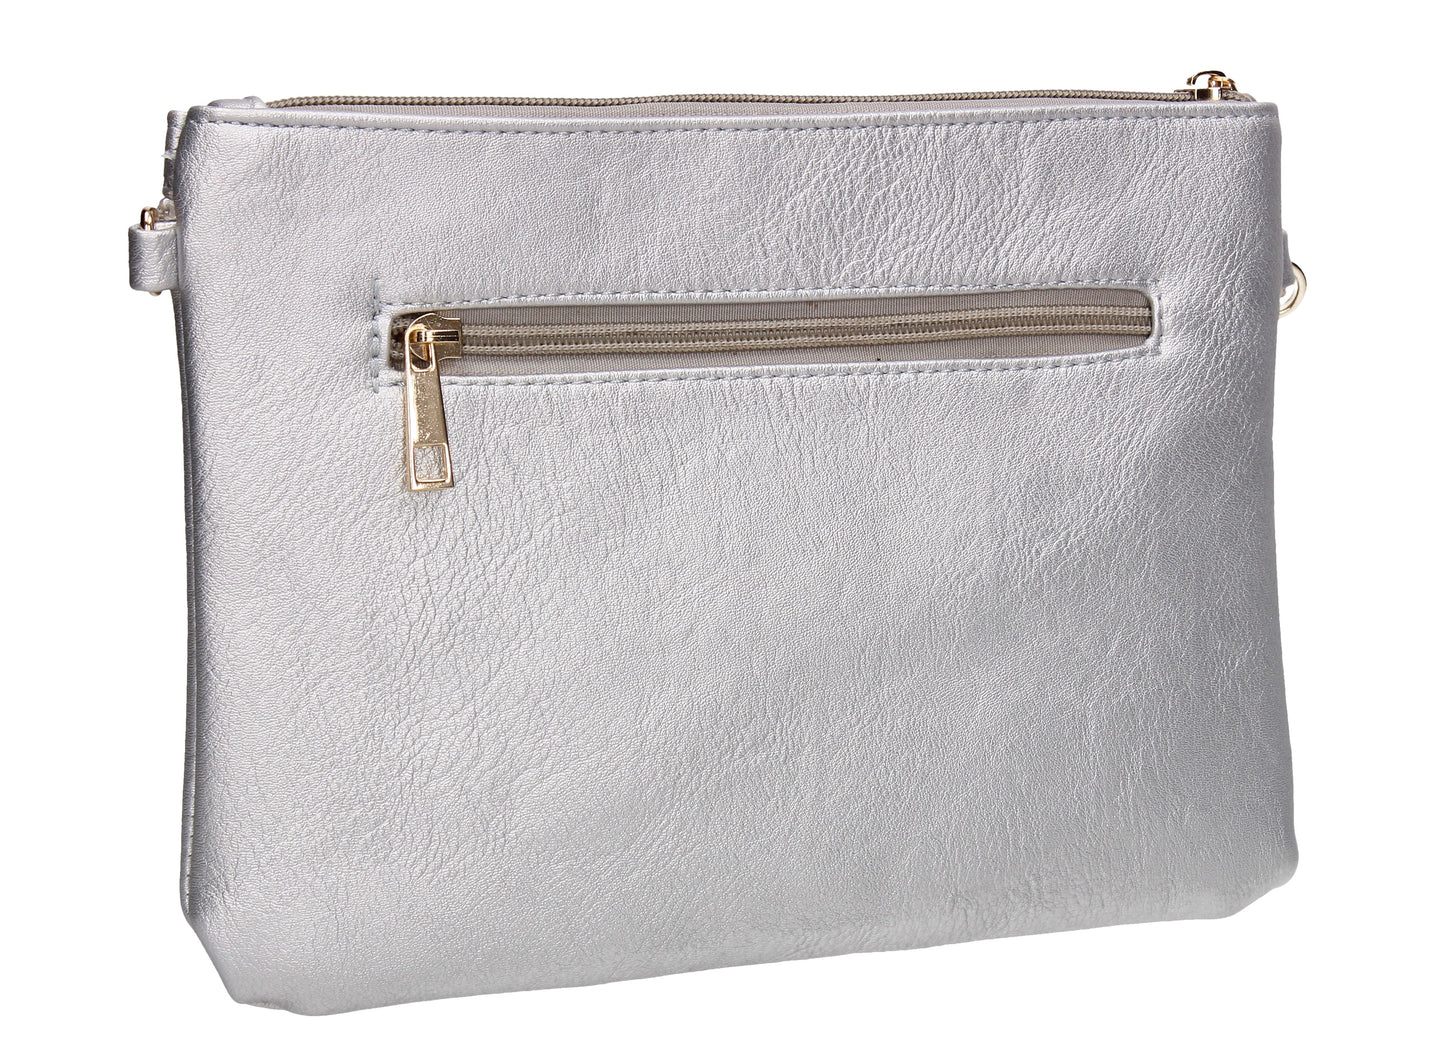 SWANKYSWANS Delilah Clutch Bag Silver Cute Cheap Clutch Bag For Weddings School and Work